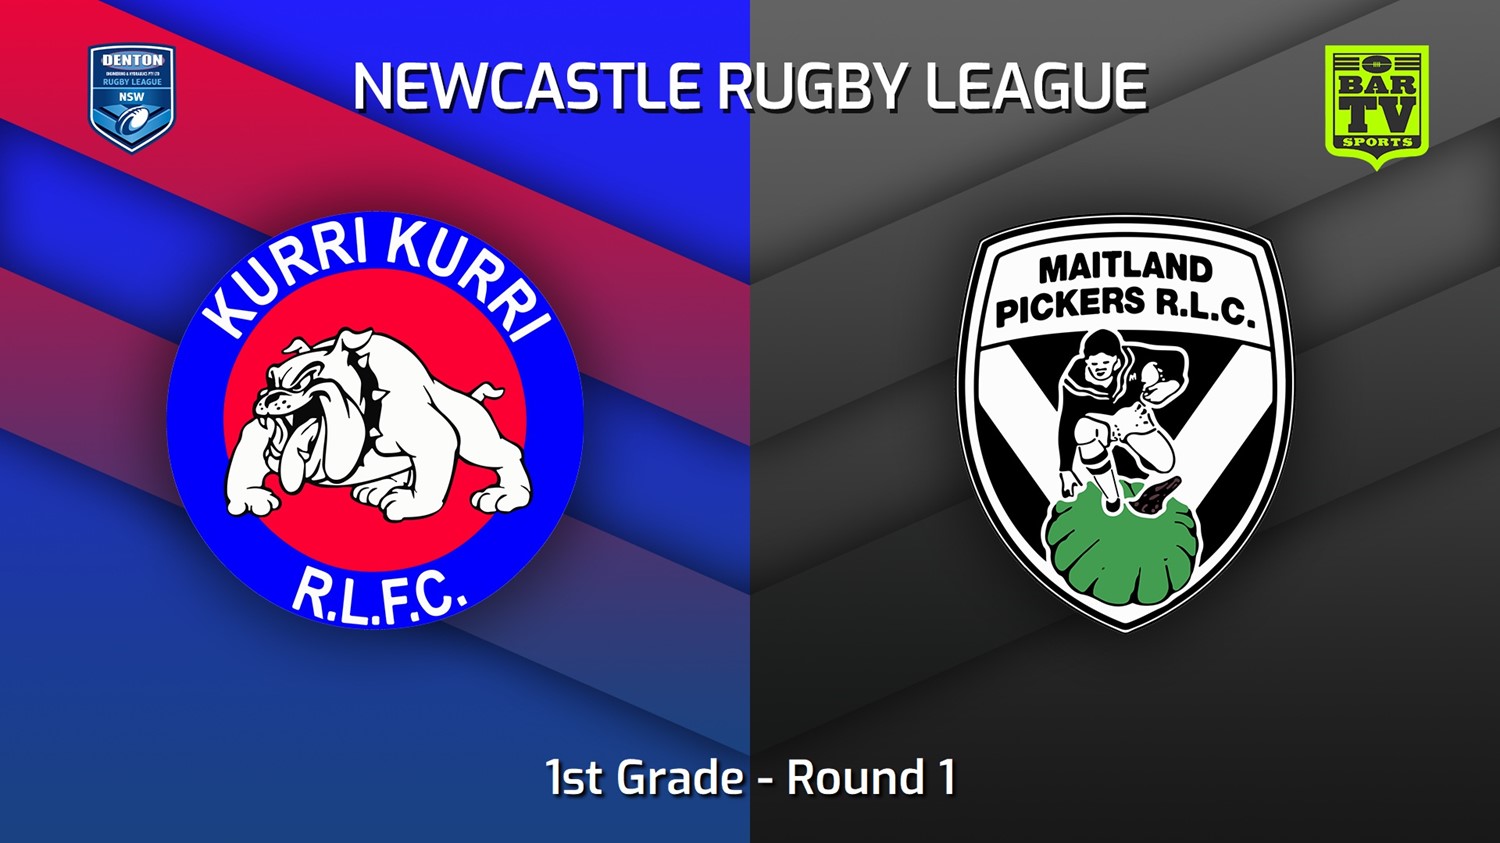 230326-Newcastle RL Round 1 - 1st Grade - Kurri Kurri Bulldogs v Maitland Pickers Minigame Slate Image